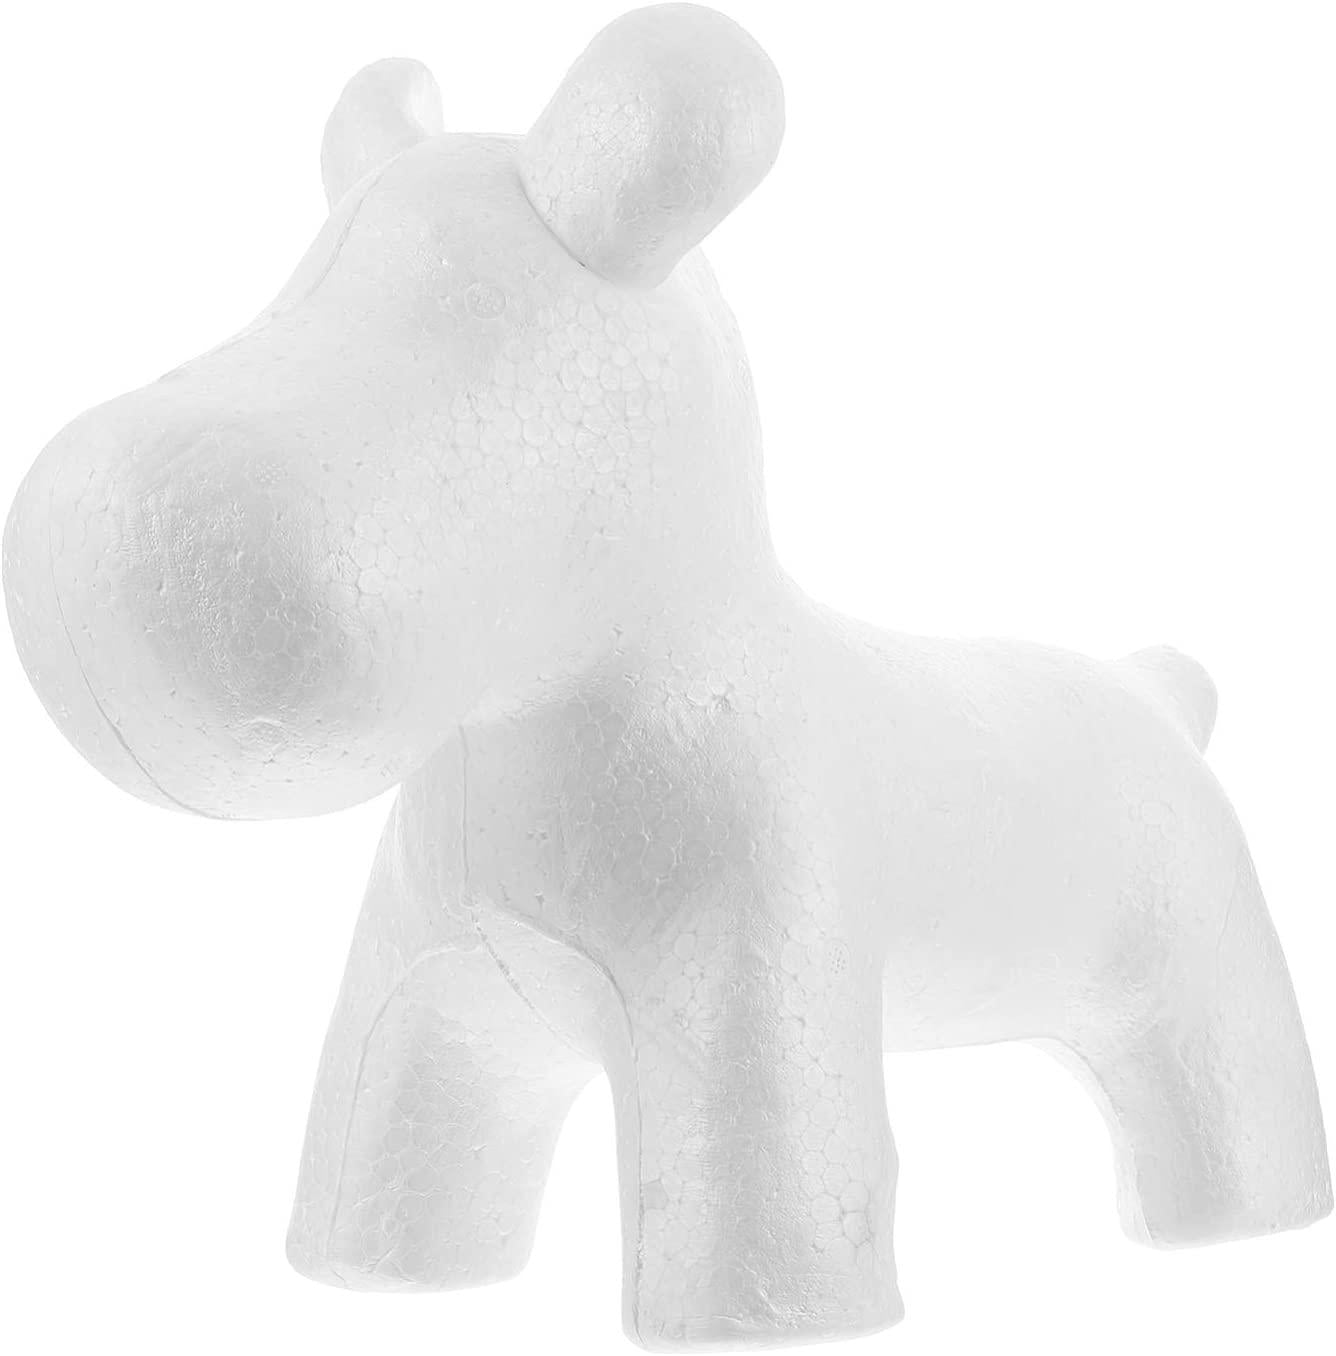 EXCEART, EXCEART Styrofoam Polystyrene Modelling Foam Polystyrene Dog Shapes White Craft Foam Balls for DIY Rose Puppy Flower Decor Christmas Centerpiece Craft Art Supplies